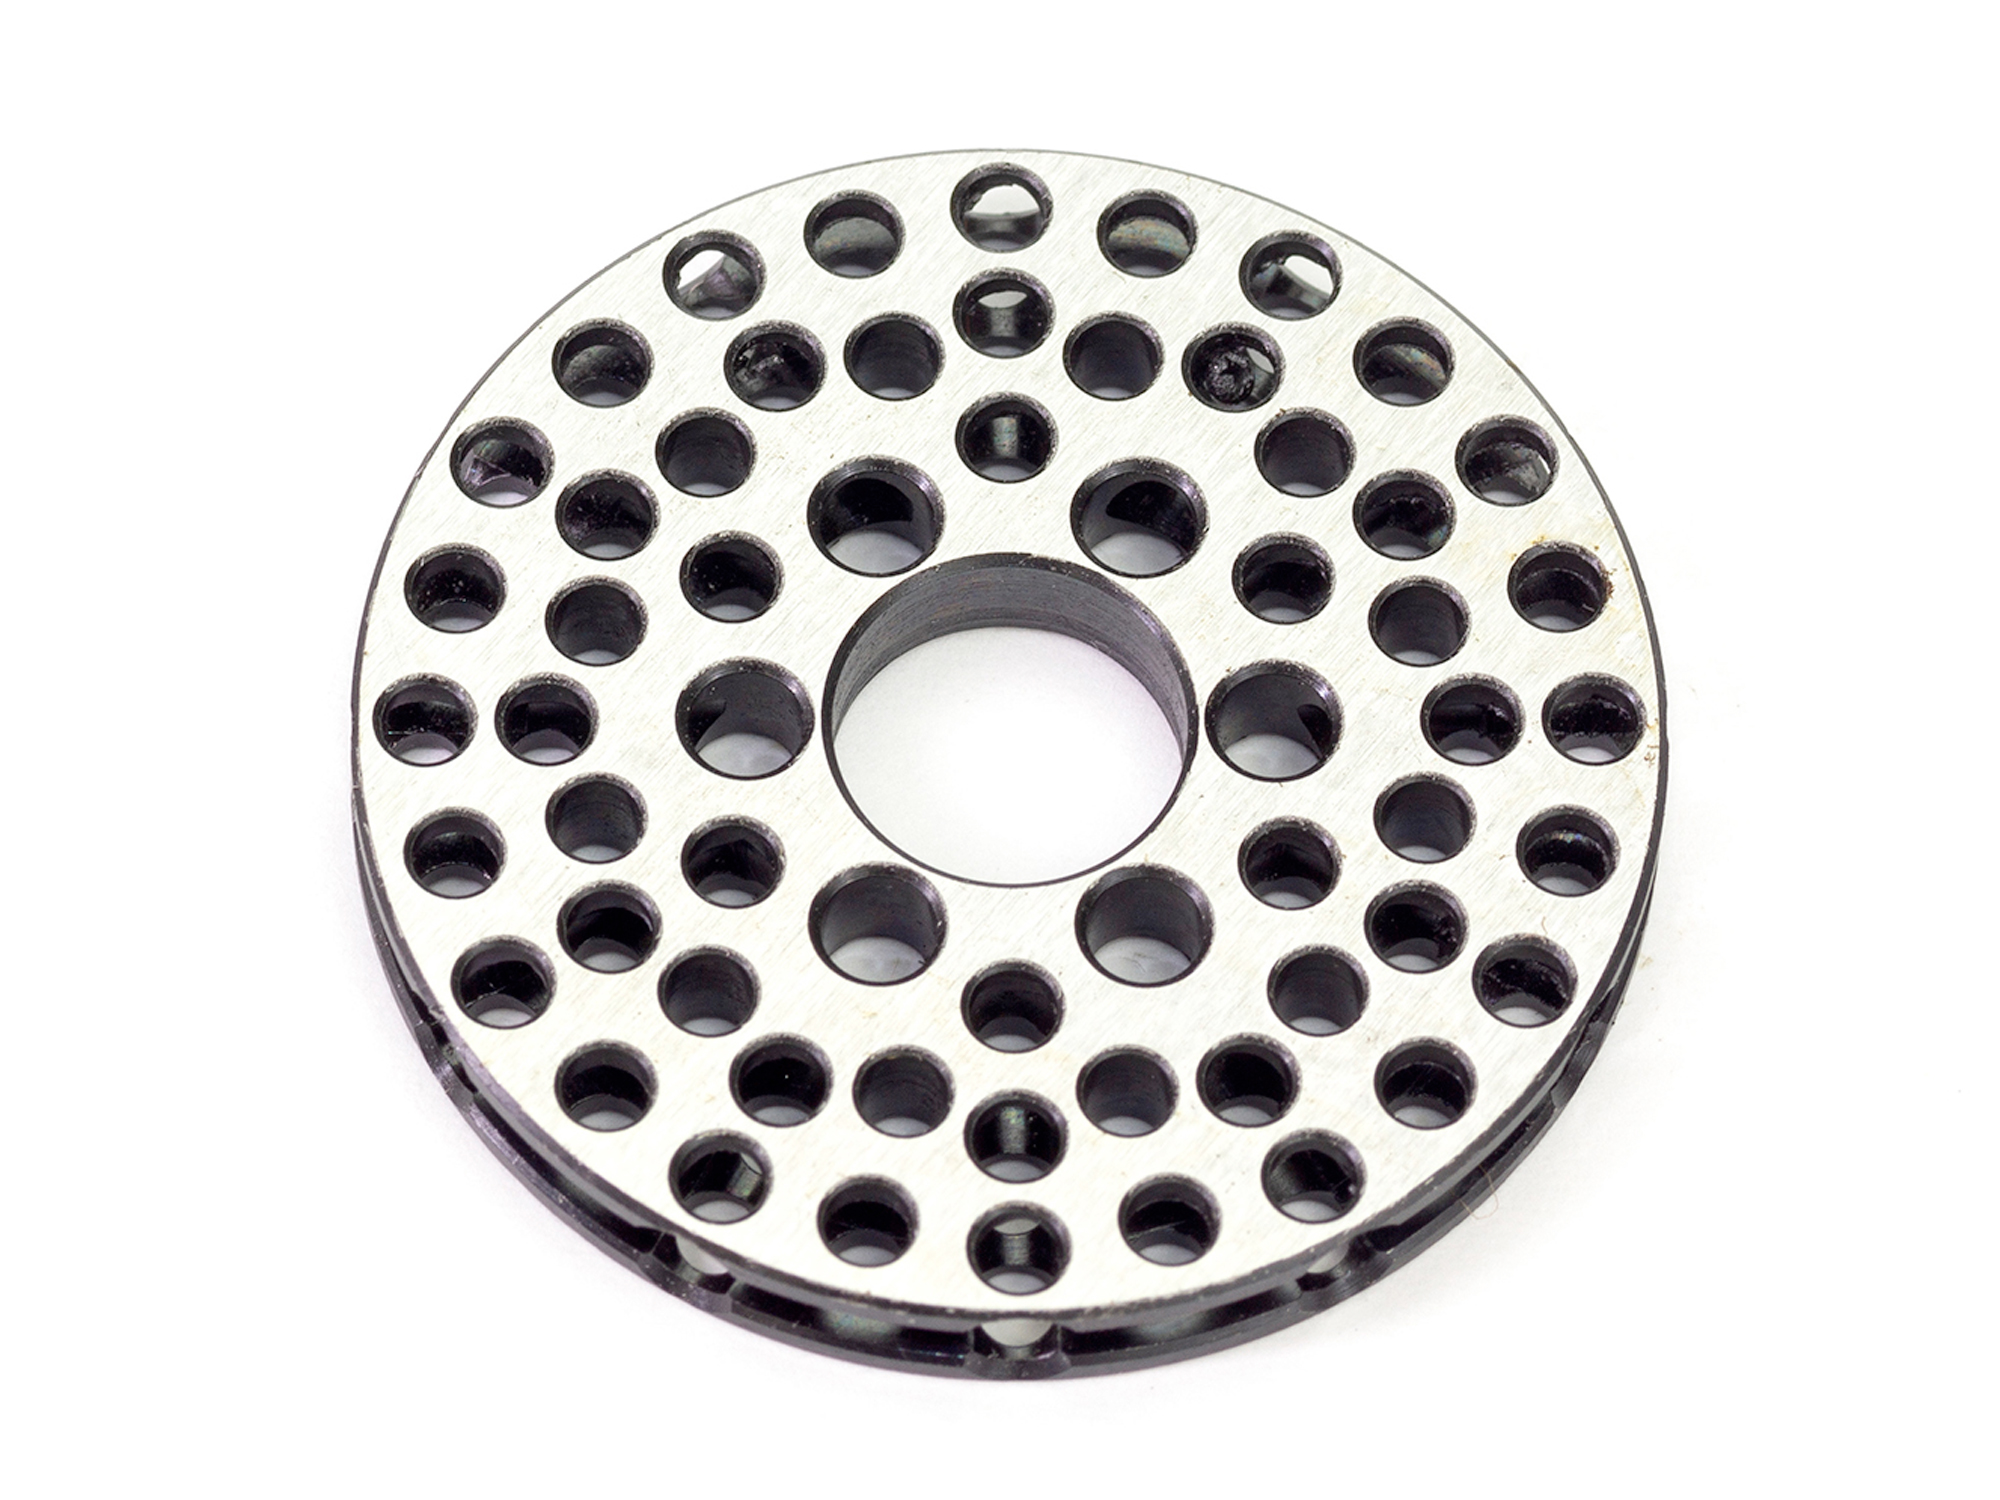 Newly designed large diameter ventilated brake discs